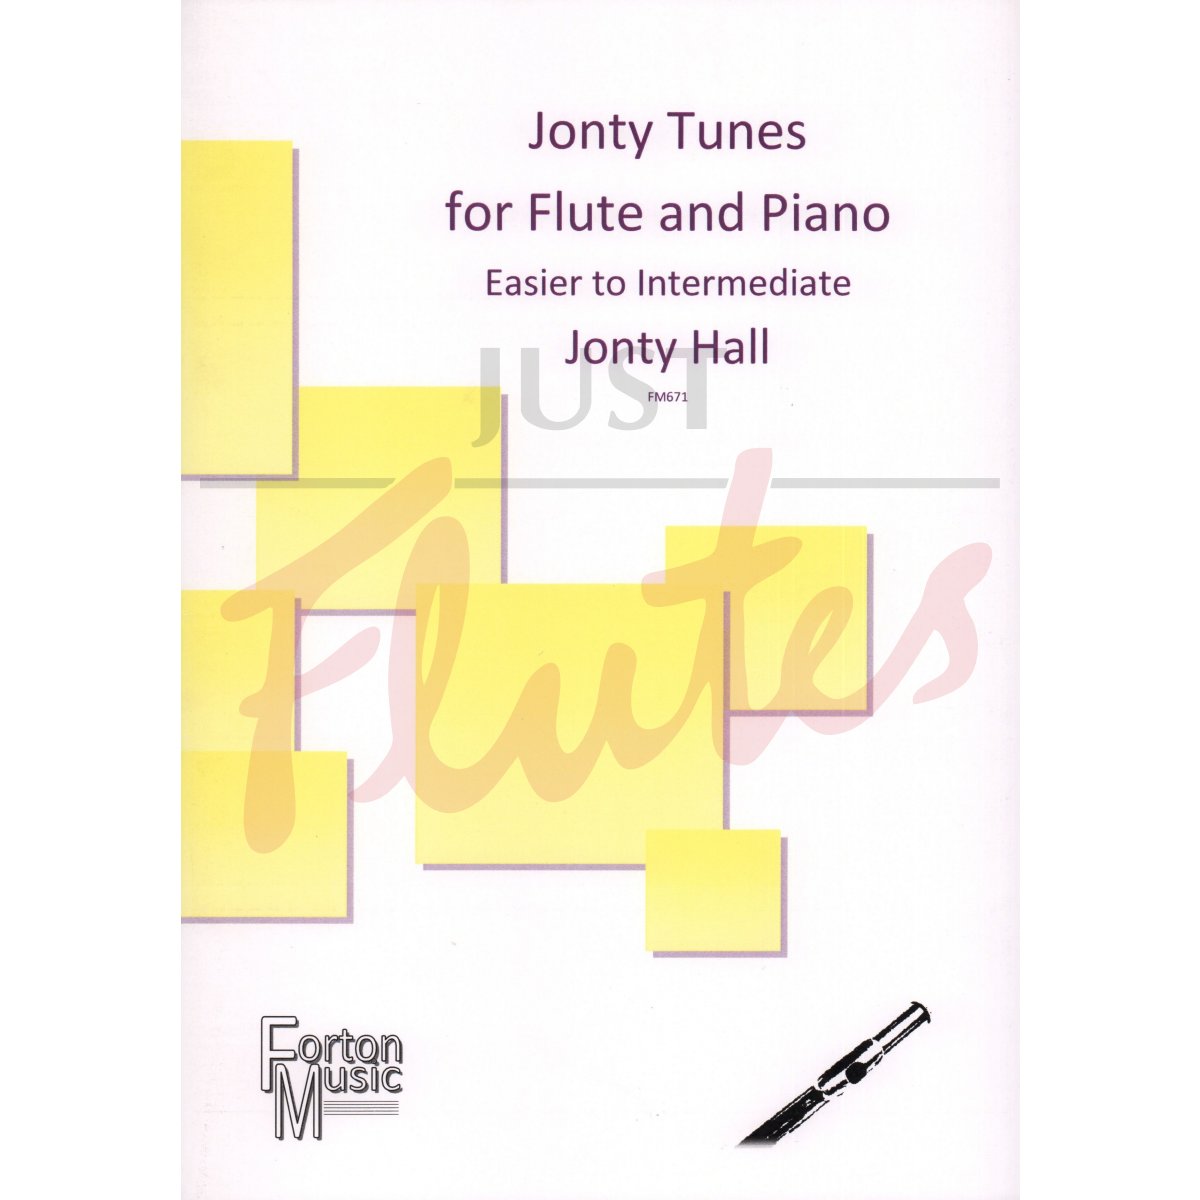 Jonty Tunes for Flute and Piano